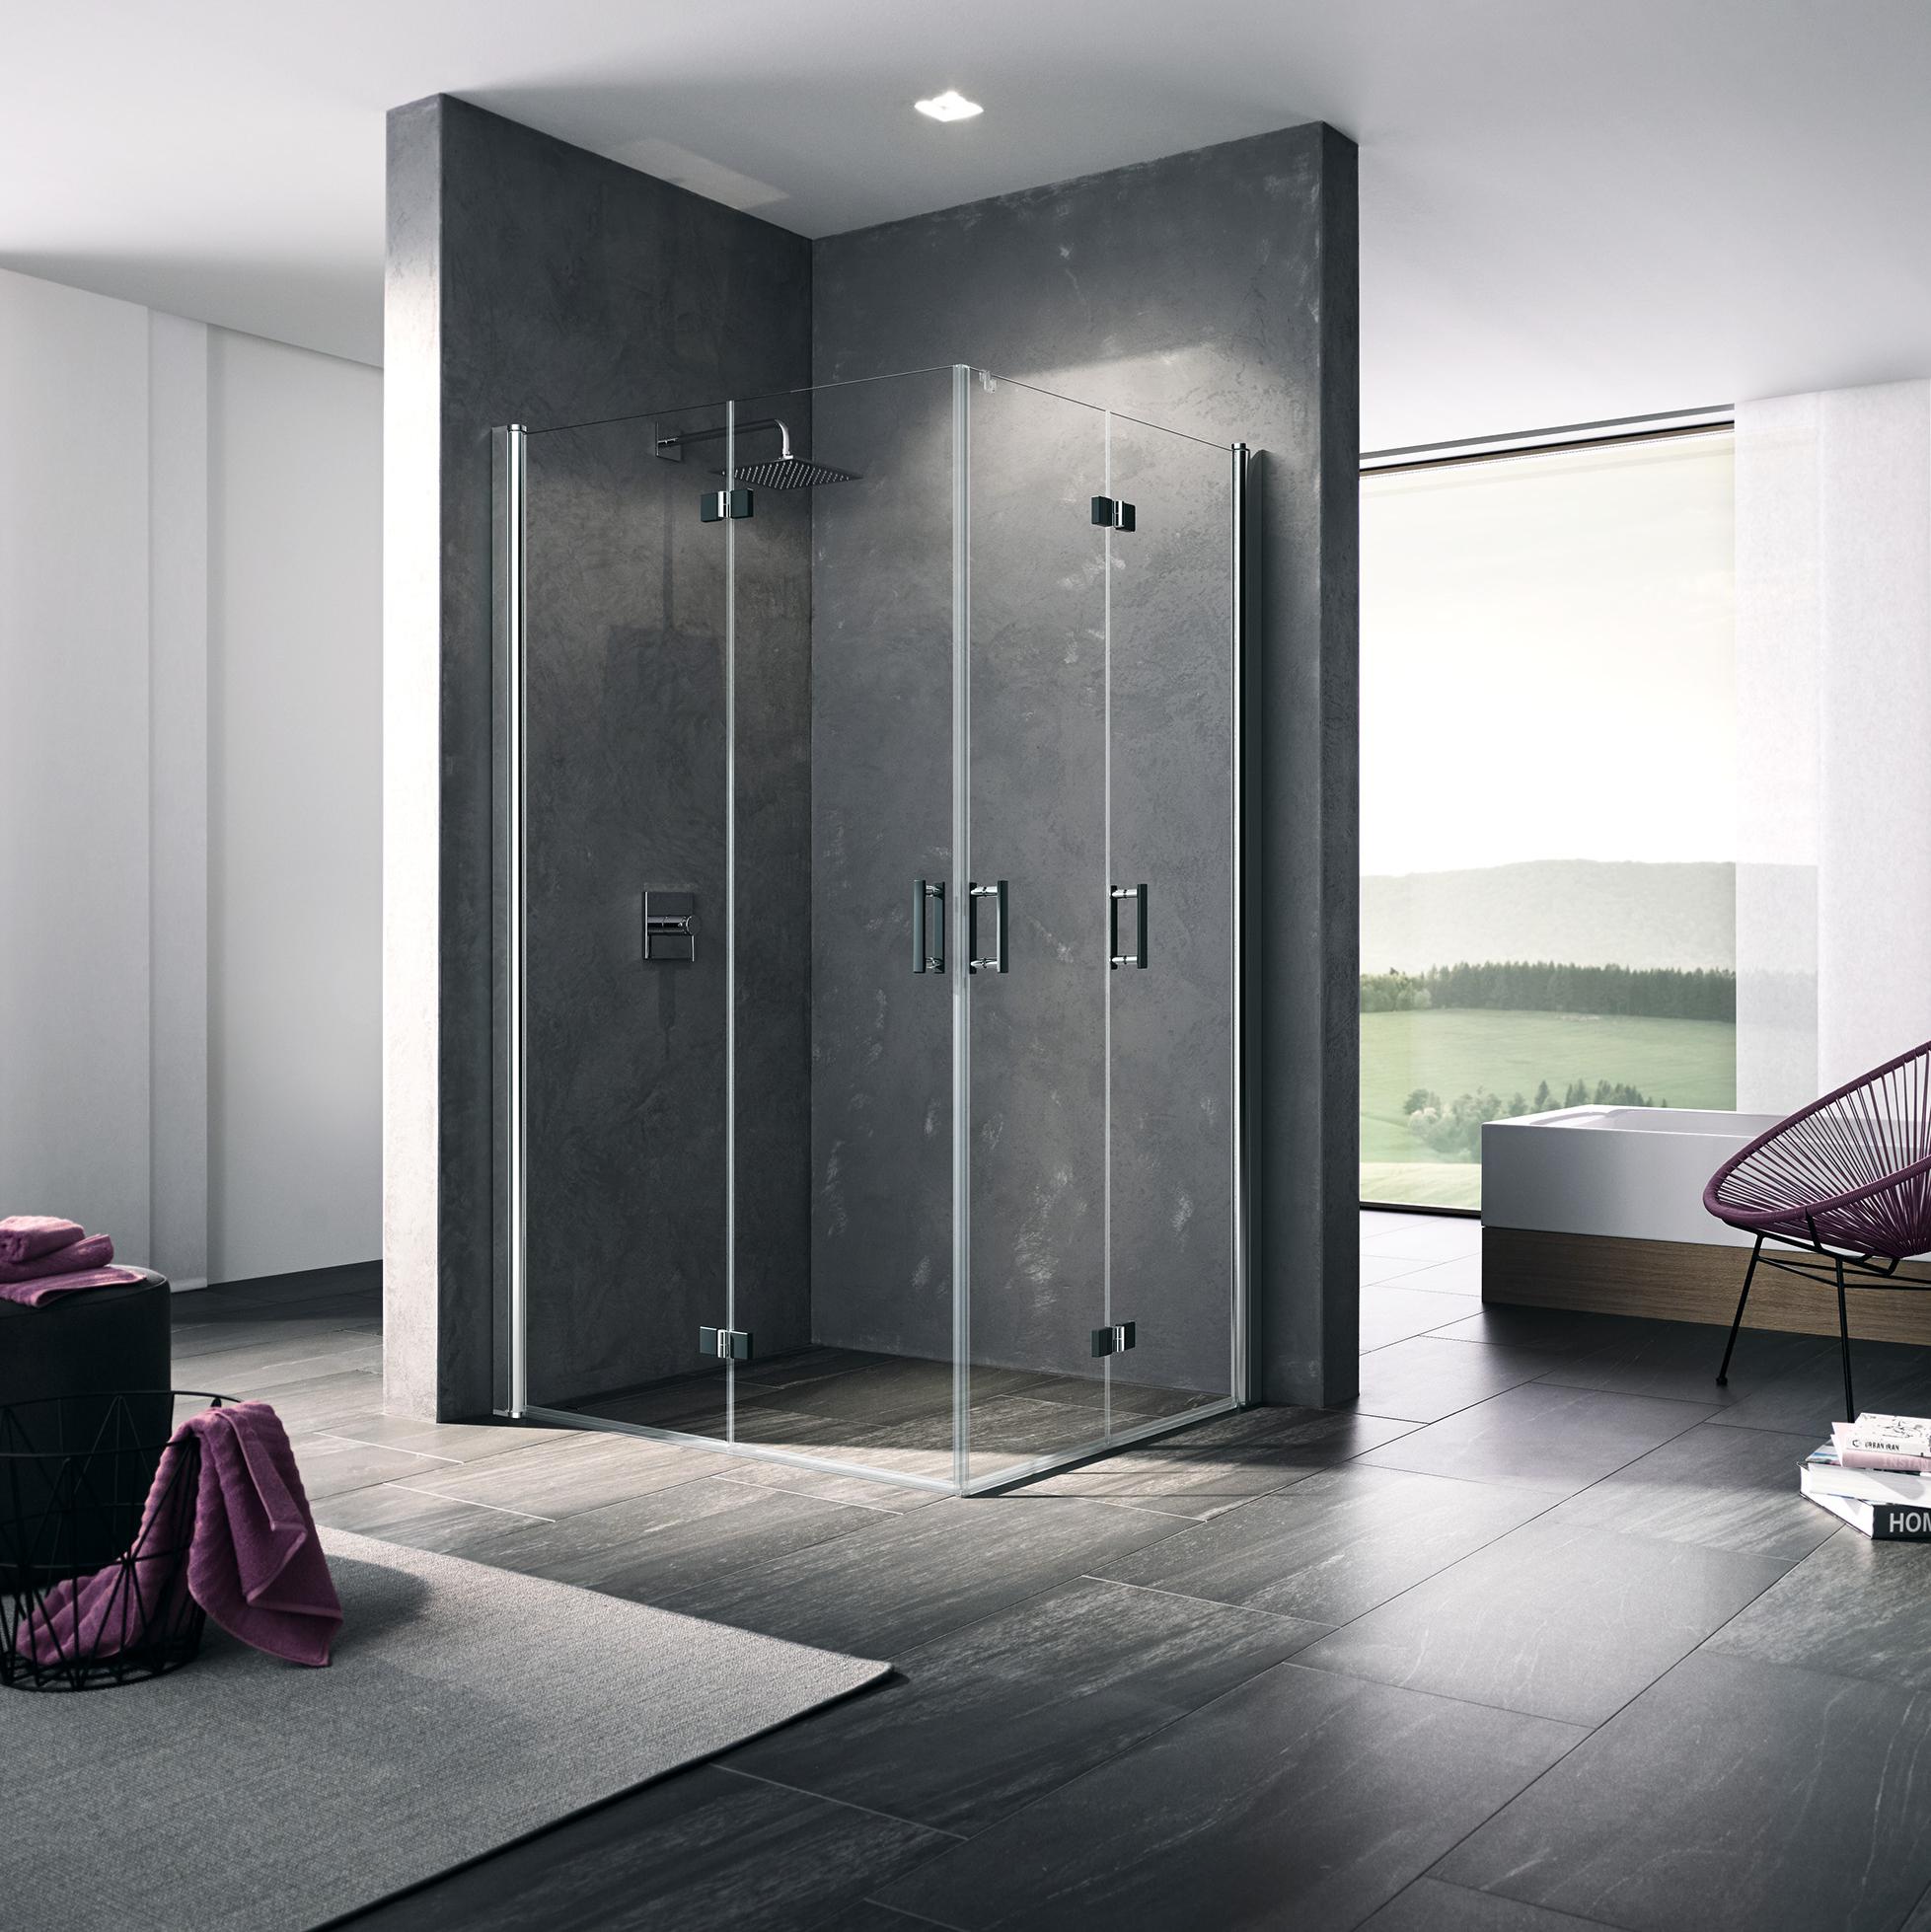 Kermi profile shower enclosure, DIGA two-part corner entry (hinged folding doors) – half part